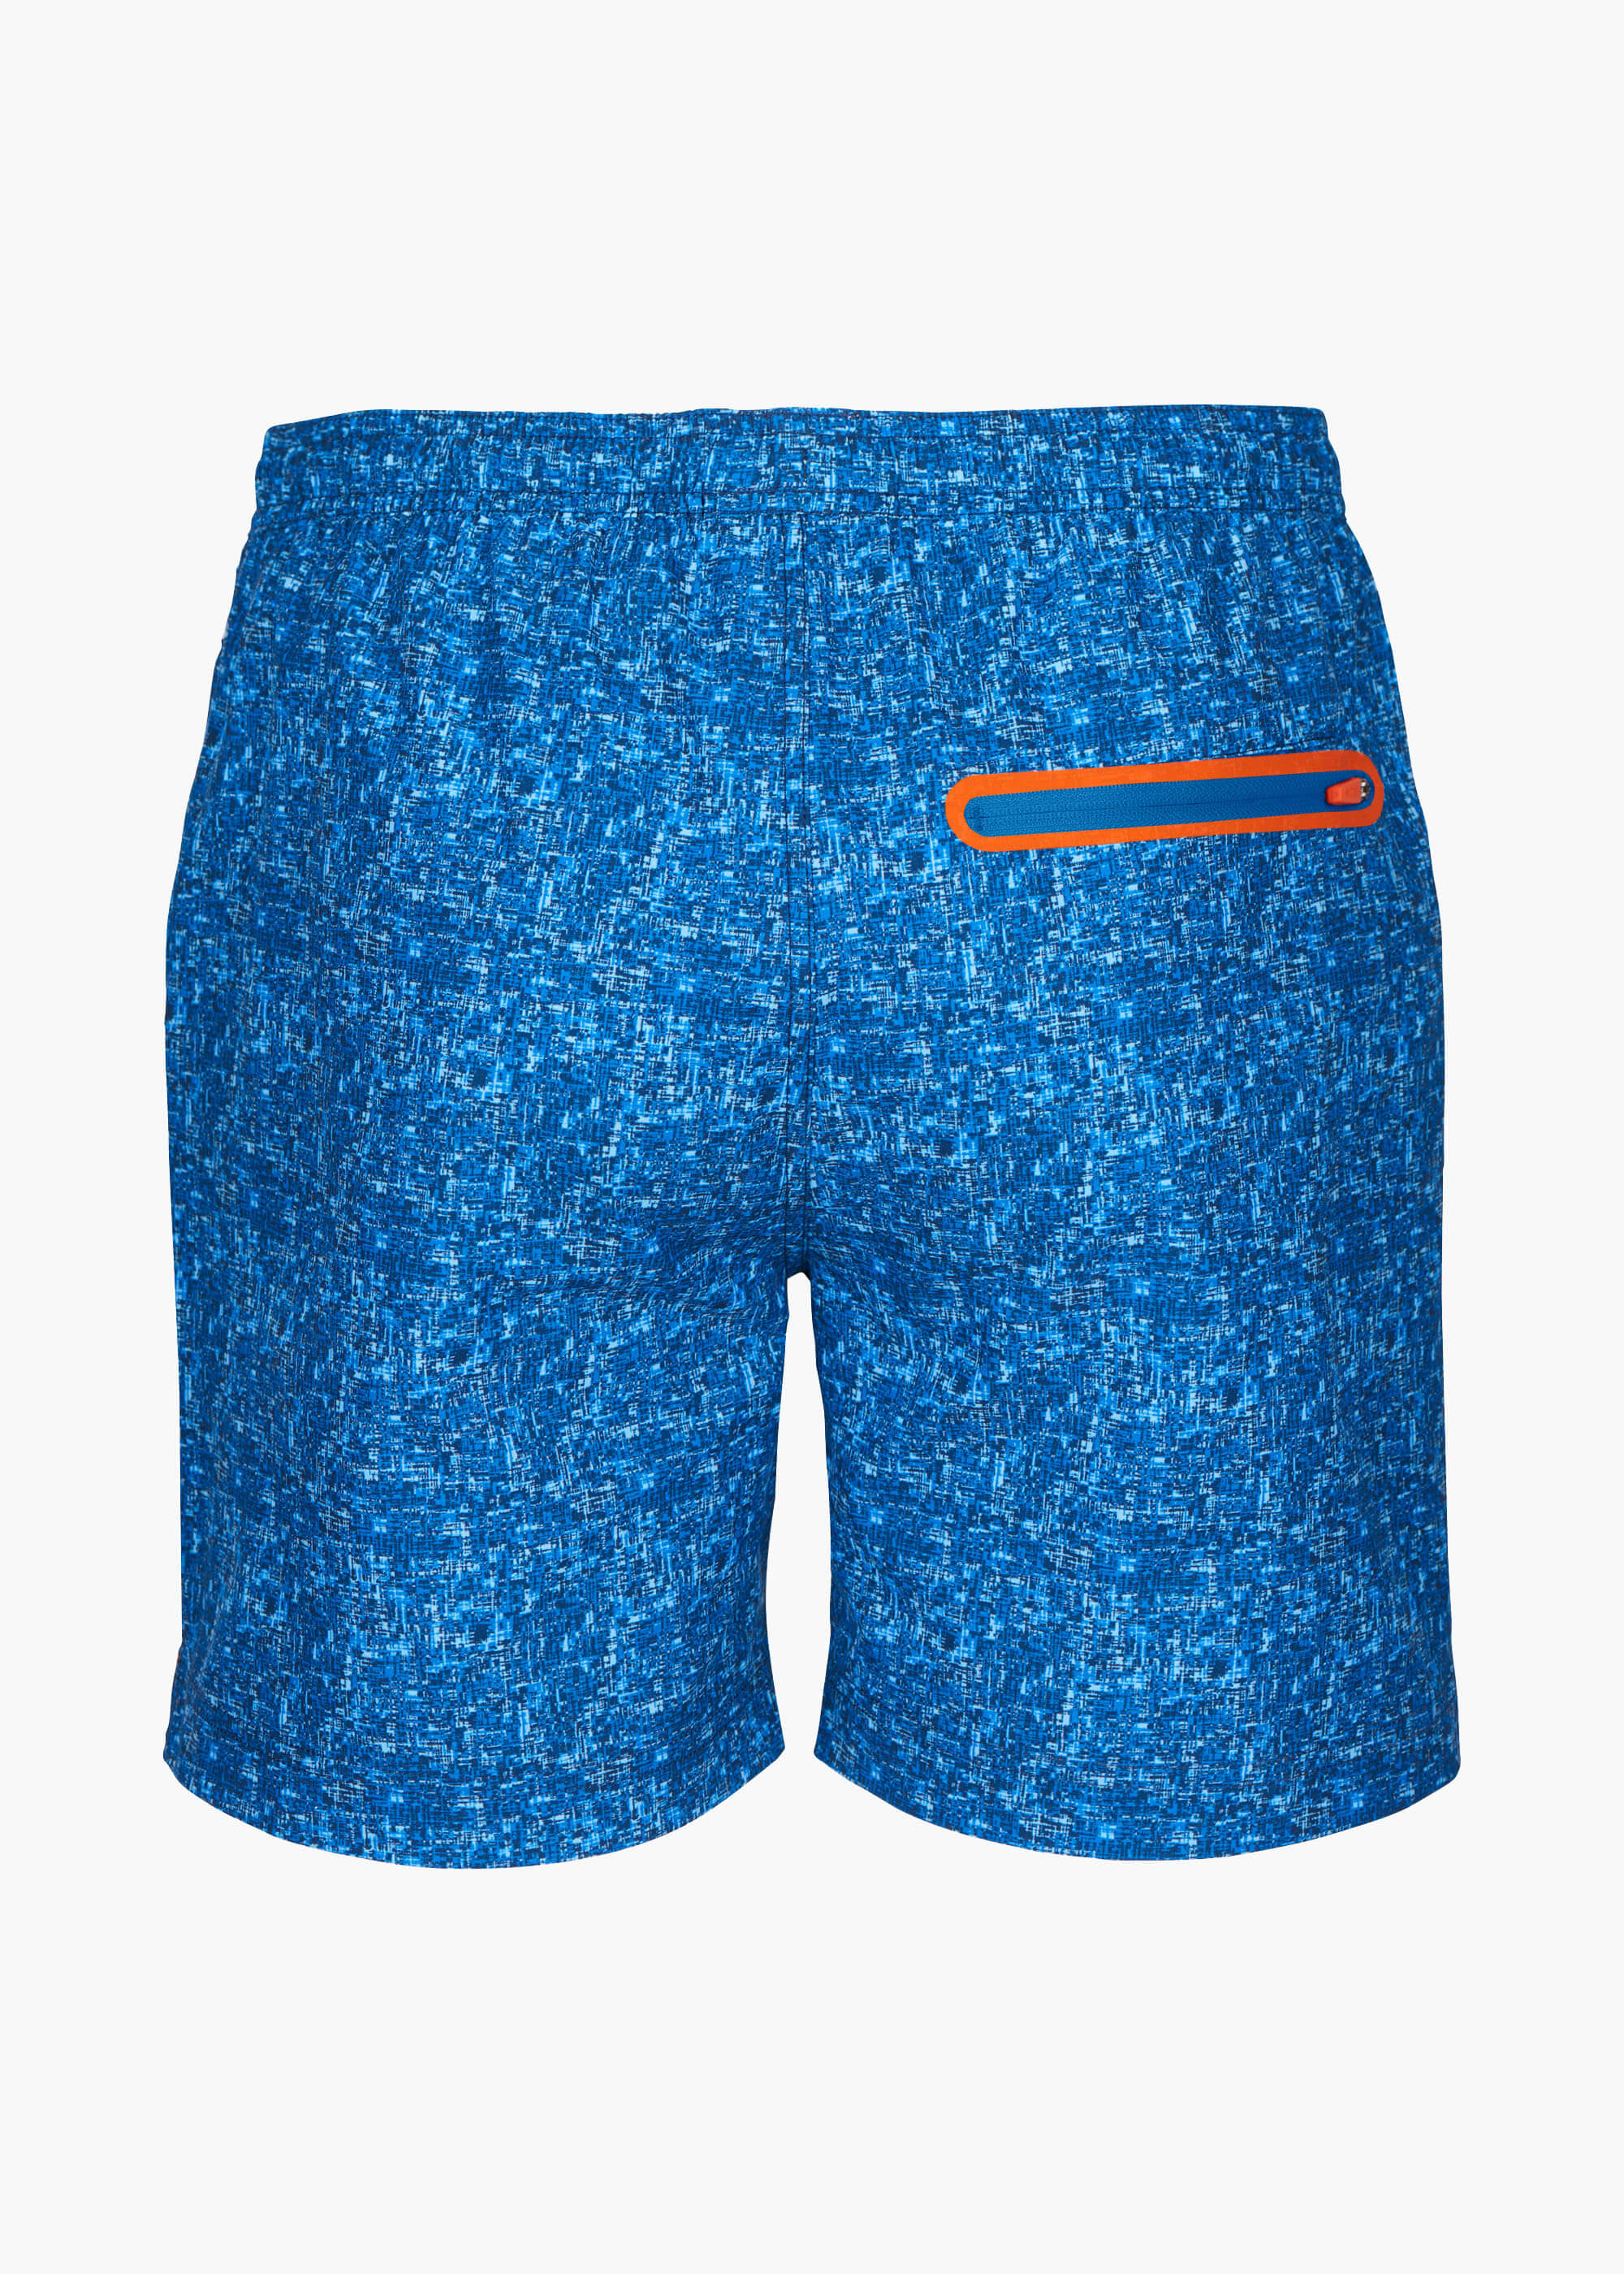 Sol Swim Short (6 ½” inseam) - background::white,variant::Ponza Ensign Blue